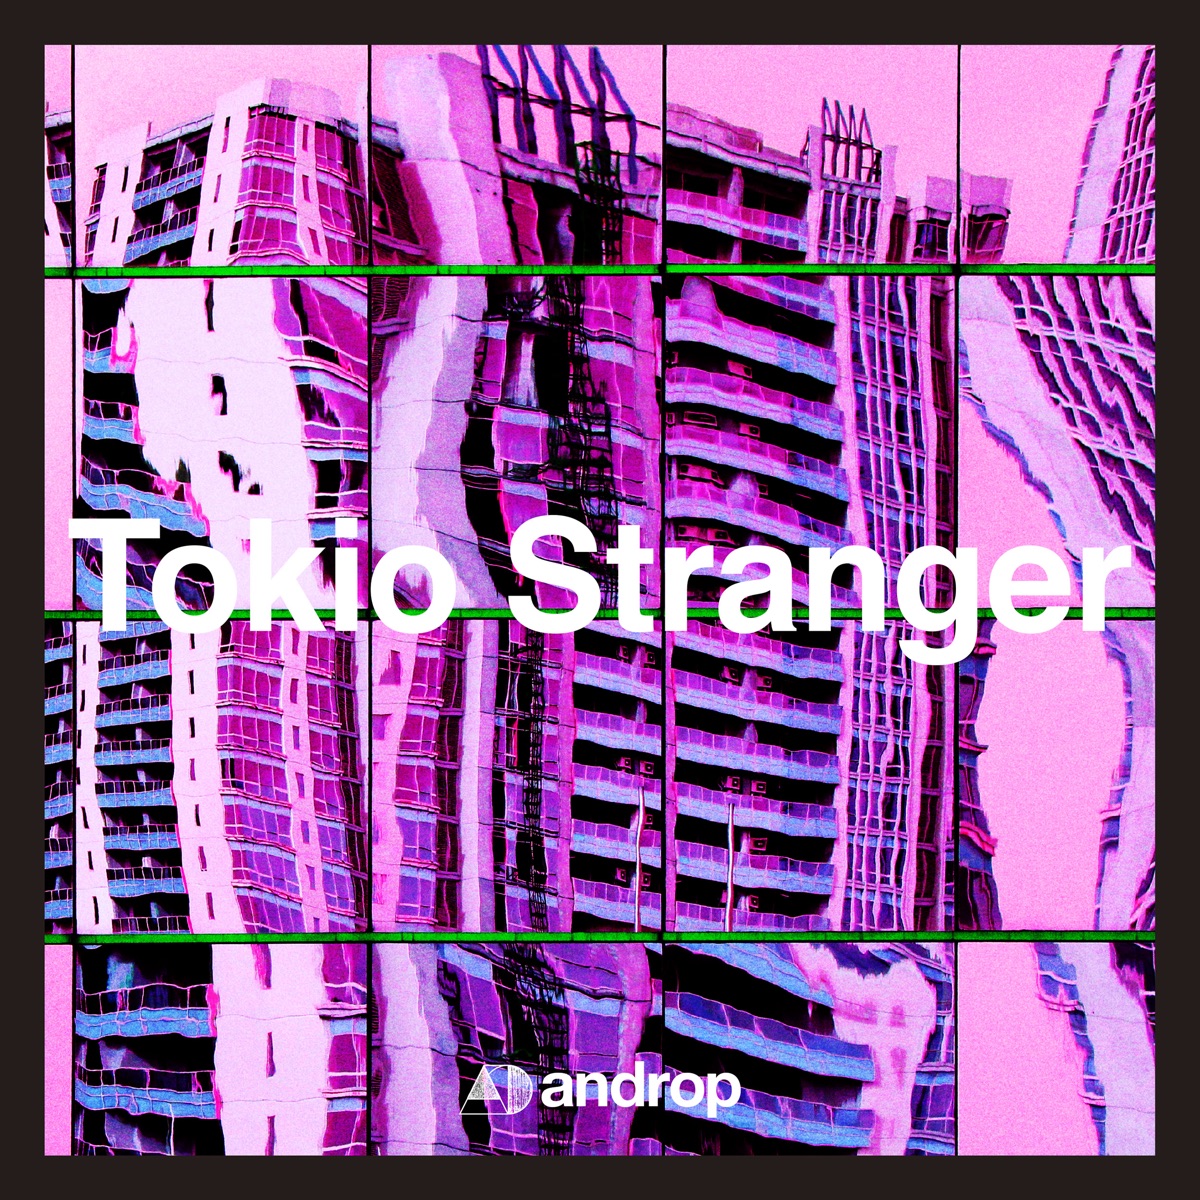 Cover art for『androp - Tokio Stranger』from the release『Tokio Stranger